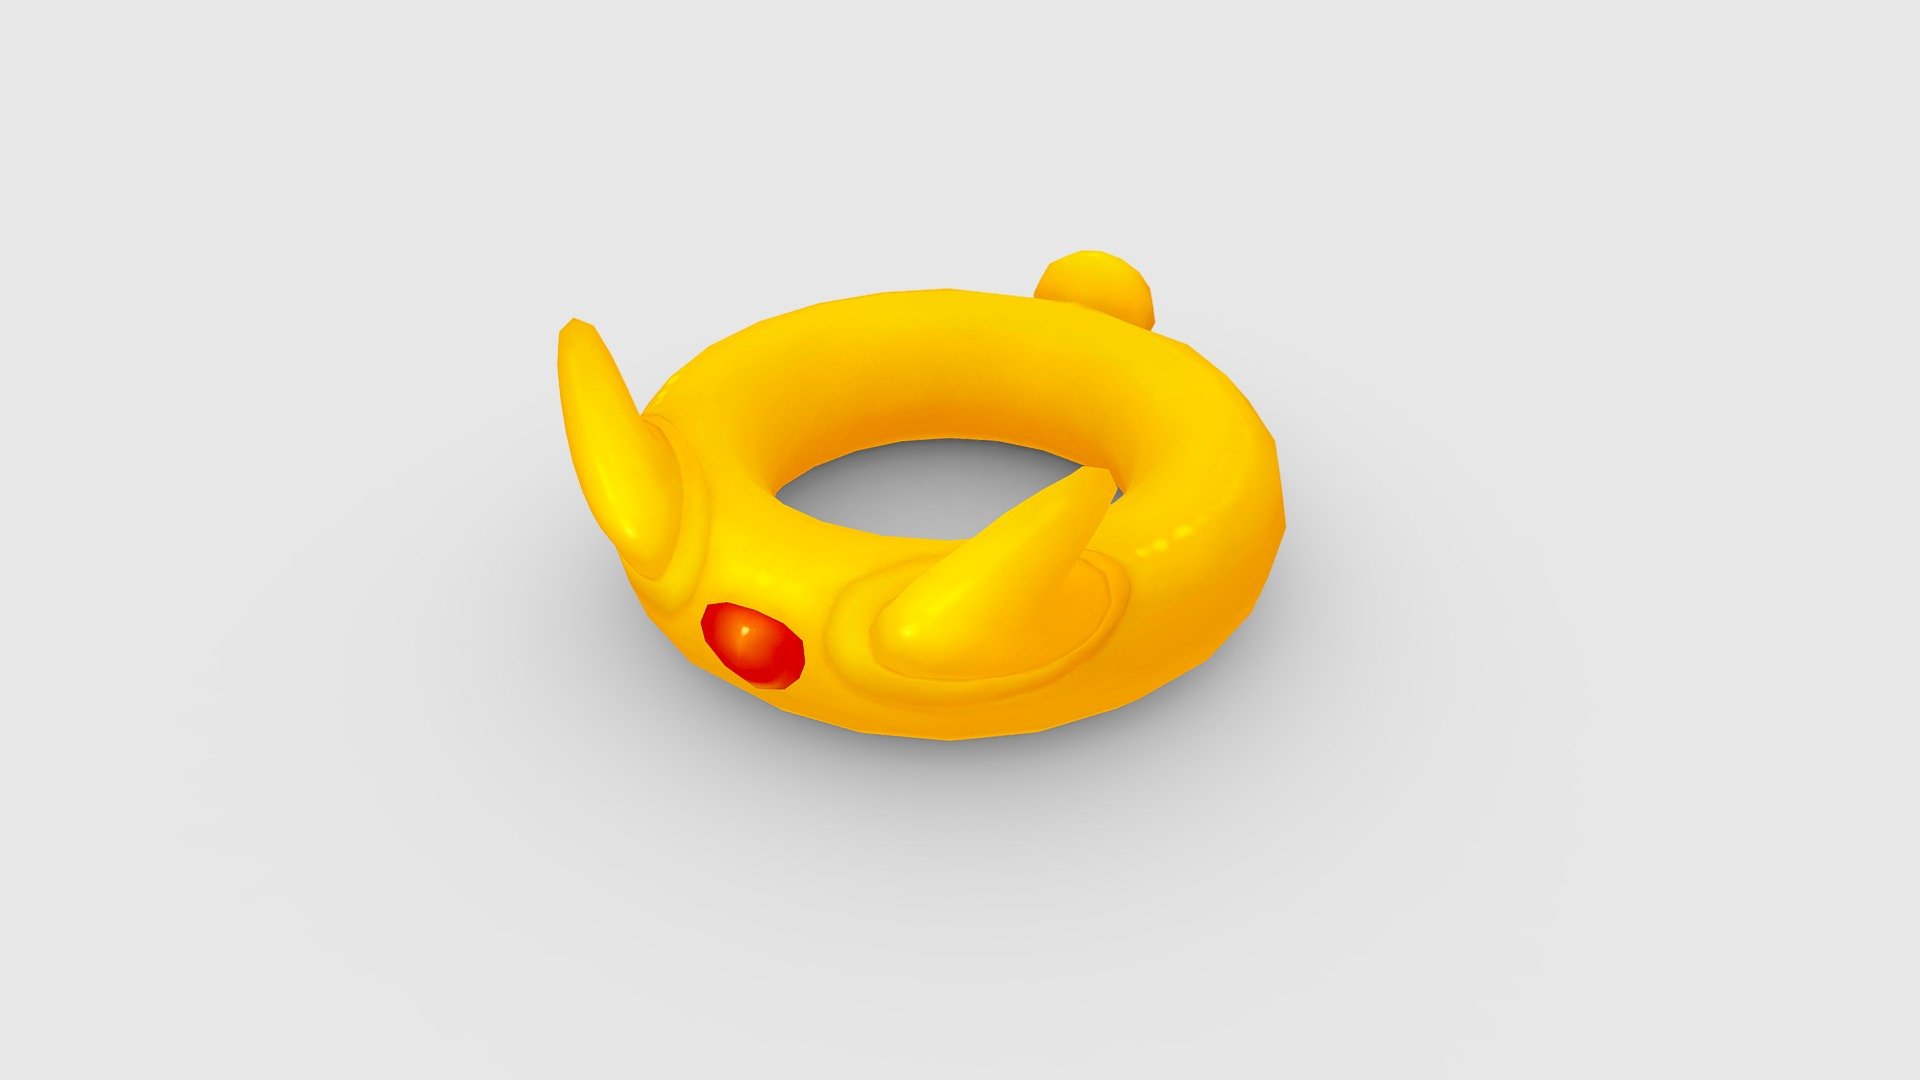 Cartoon yellow swimming circle - Life buoy Low-poly 3D model - Cartoon yellow swimming circle - Life buoy - 3D model by ler_cartoon (@lerrrrr) 3d model